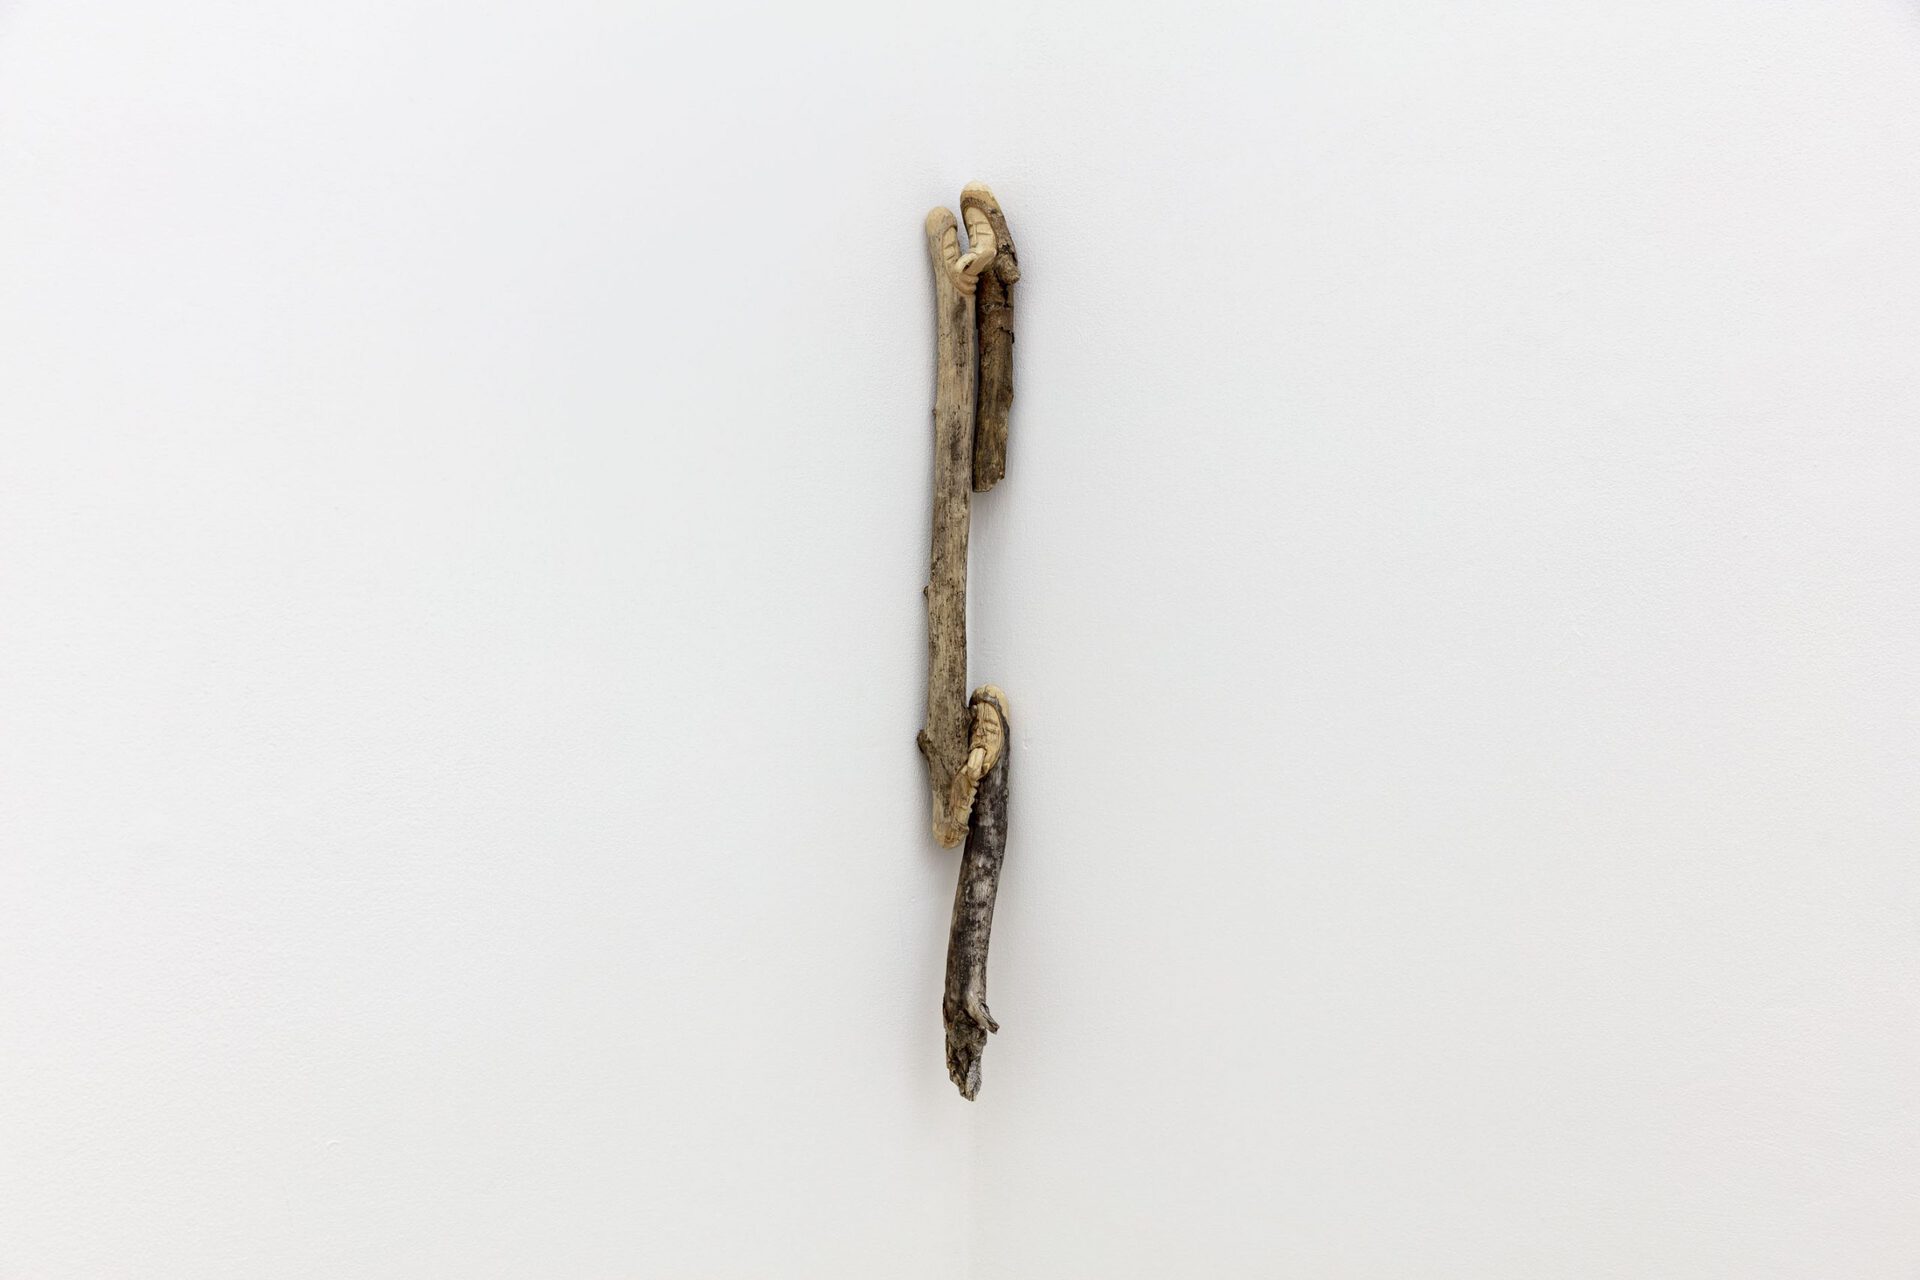 Birke Gorm, IOU, 2021, wood, 63 × 10 × 7 cm, Courtesy the artist and Croy Nielsen, Vienna.